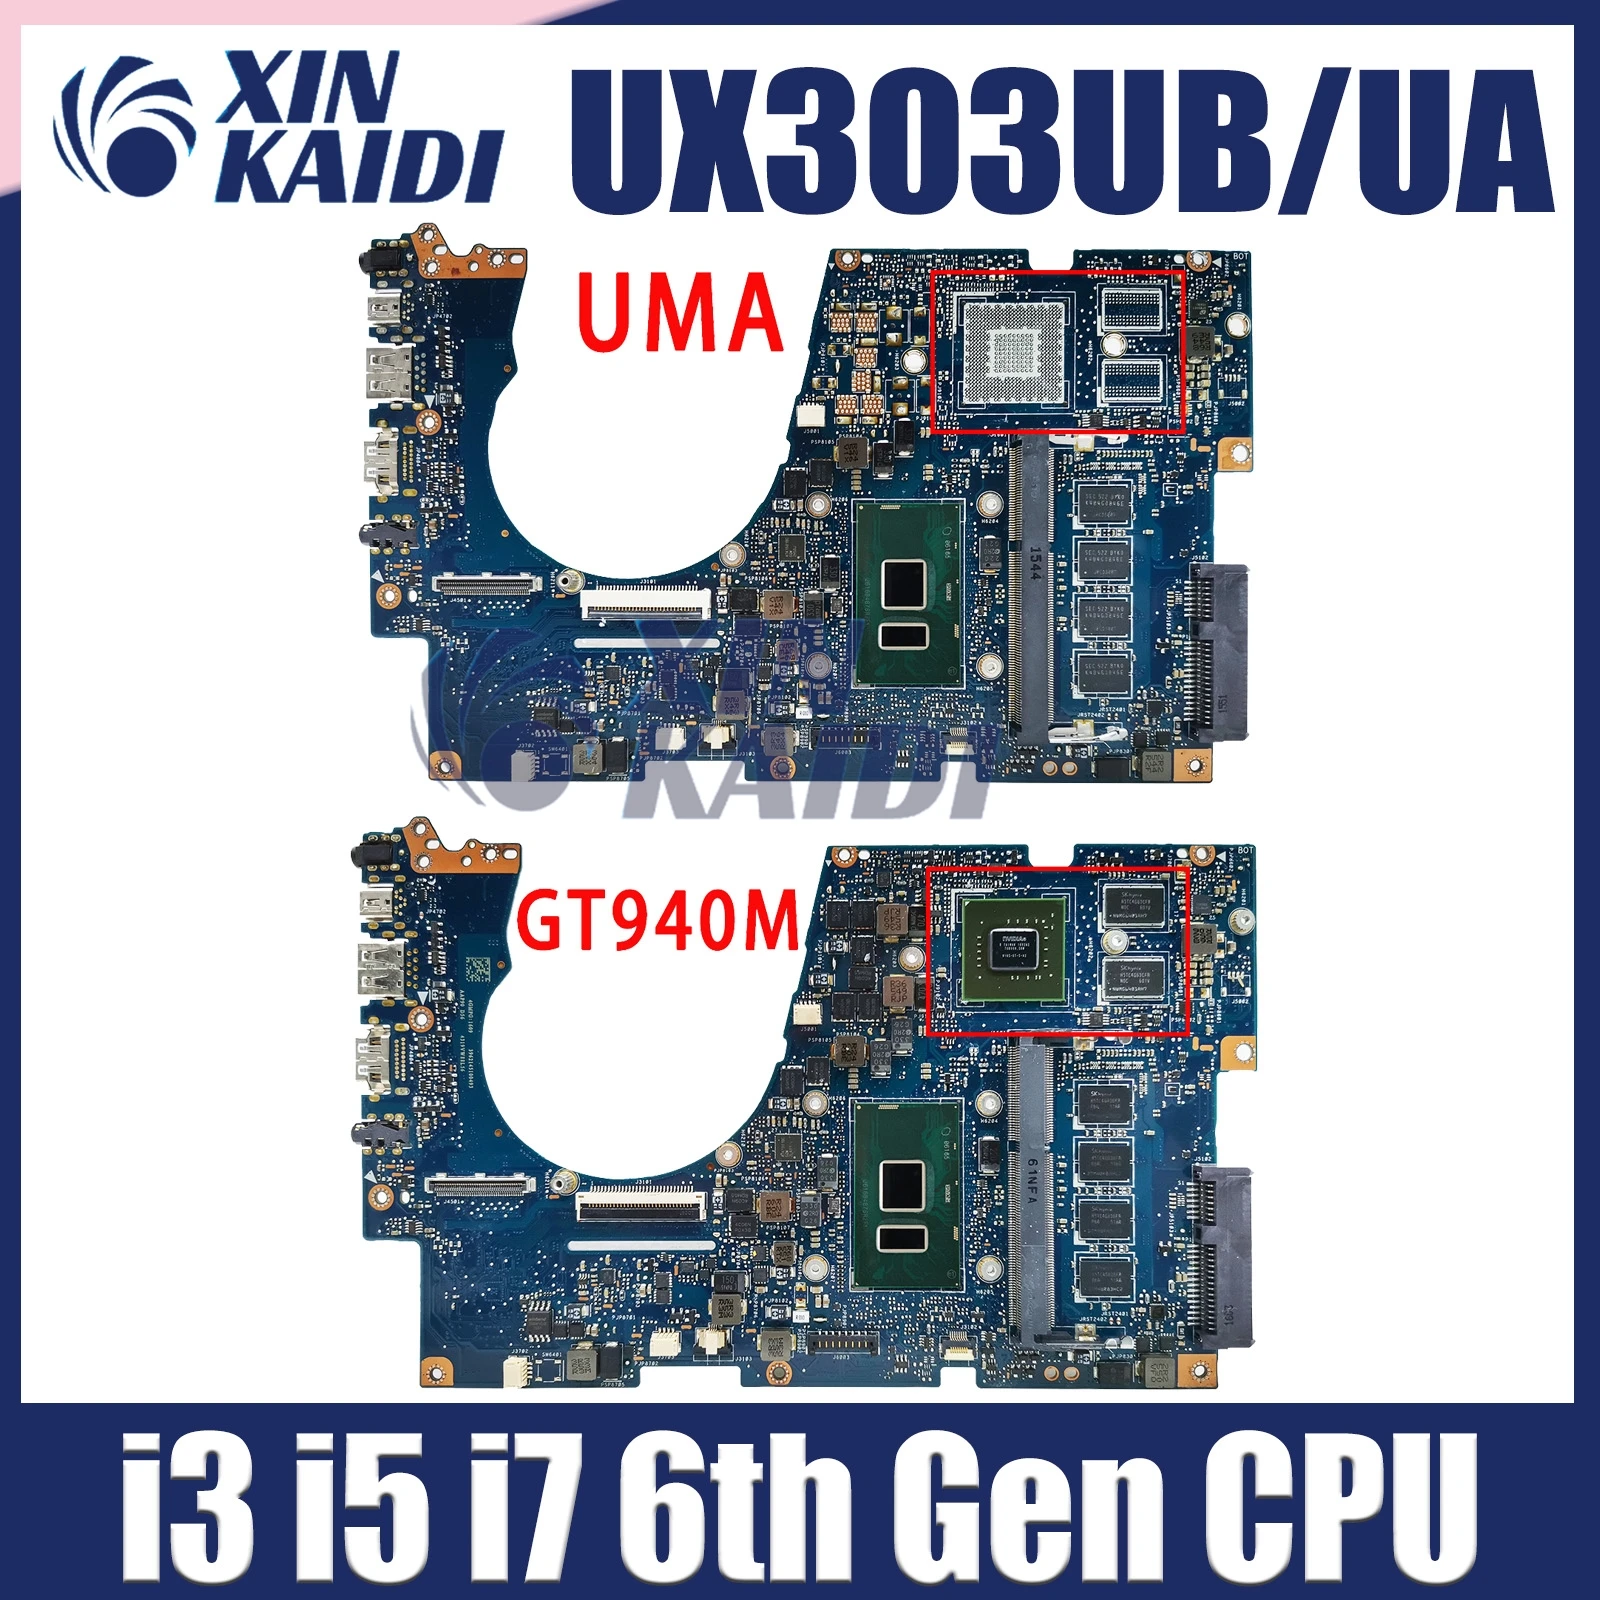 

UX303UB Mainboard For ASUS Zenbook UX303U UX303UA UX303UB Laptop Motherboardl With i7-6500U i5-6200U i3-6100U 4GB-RAM GT940M